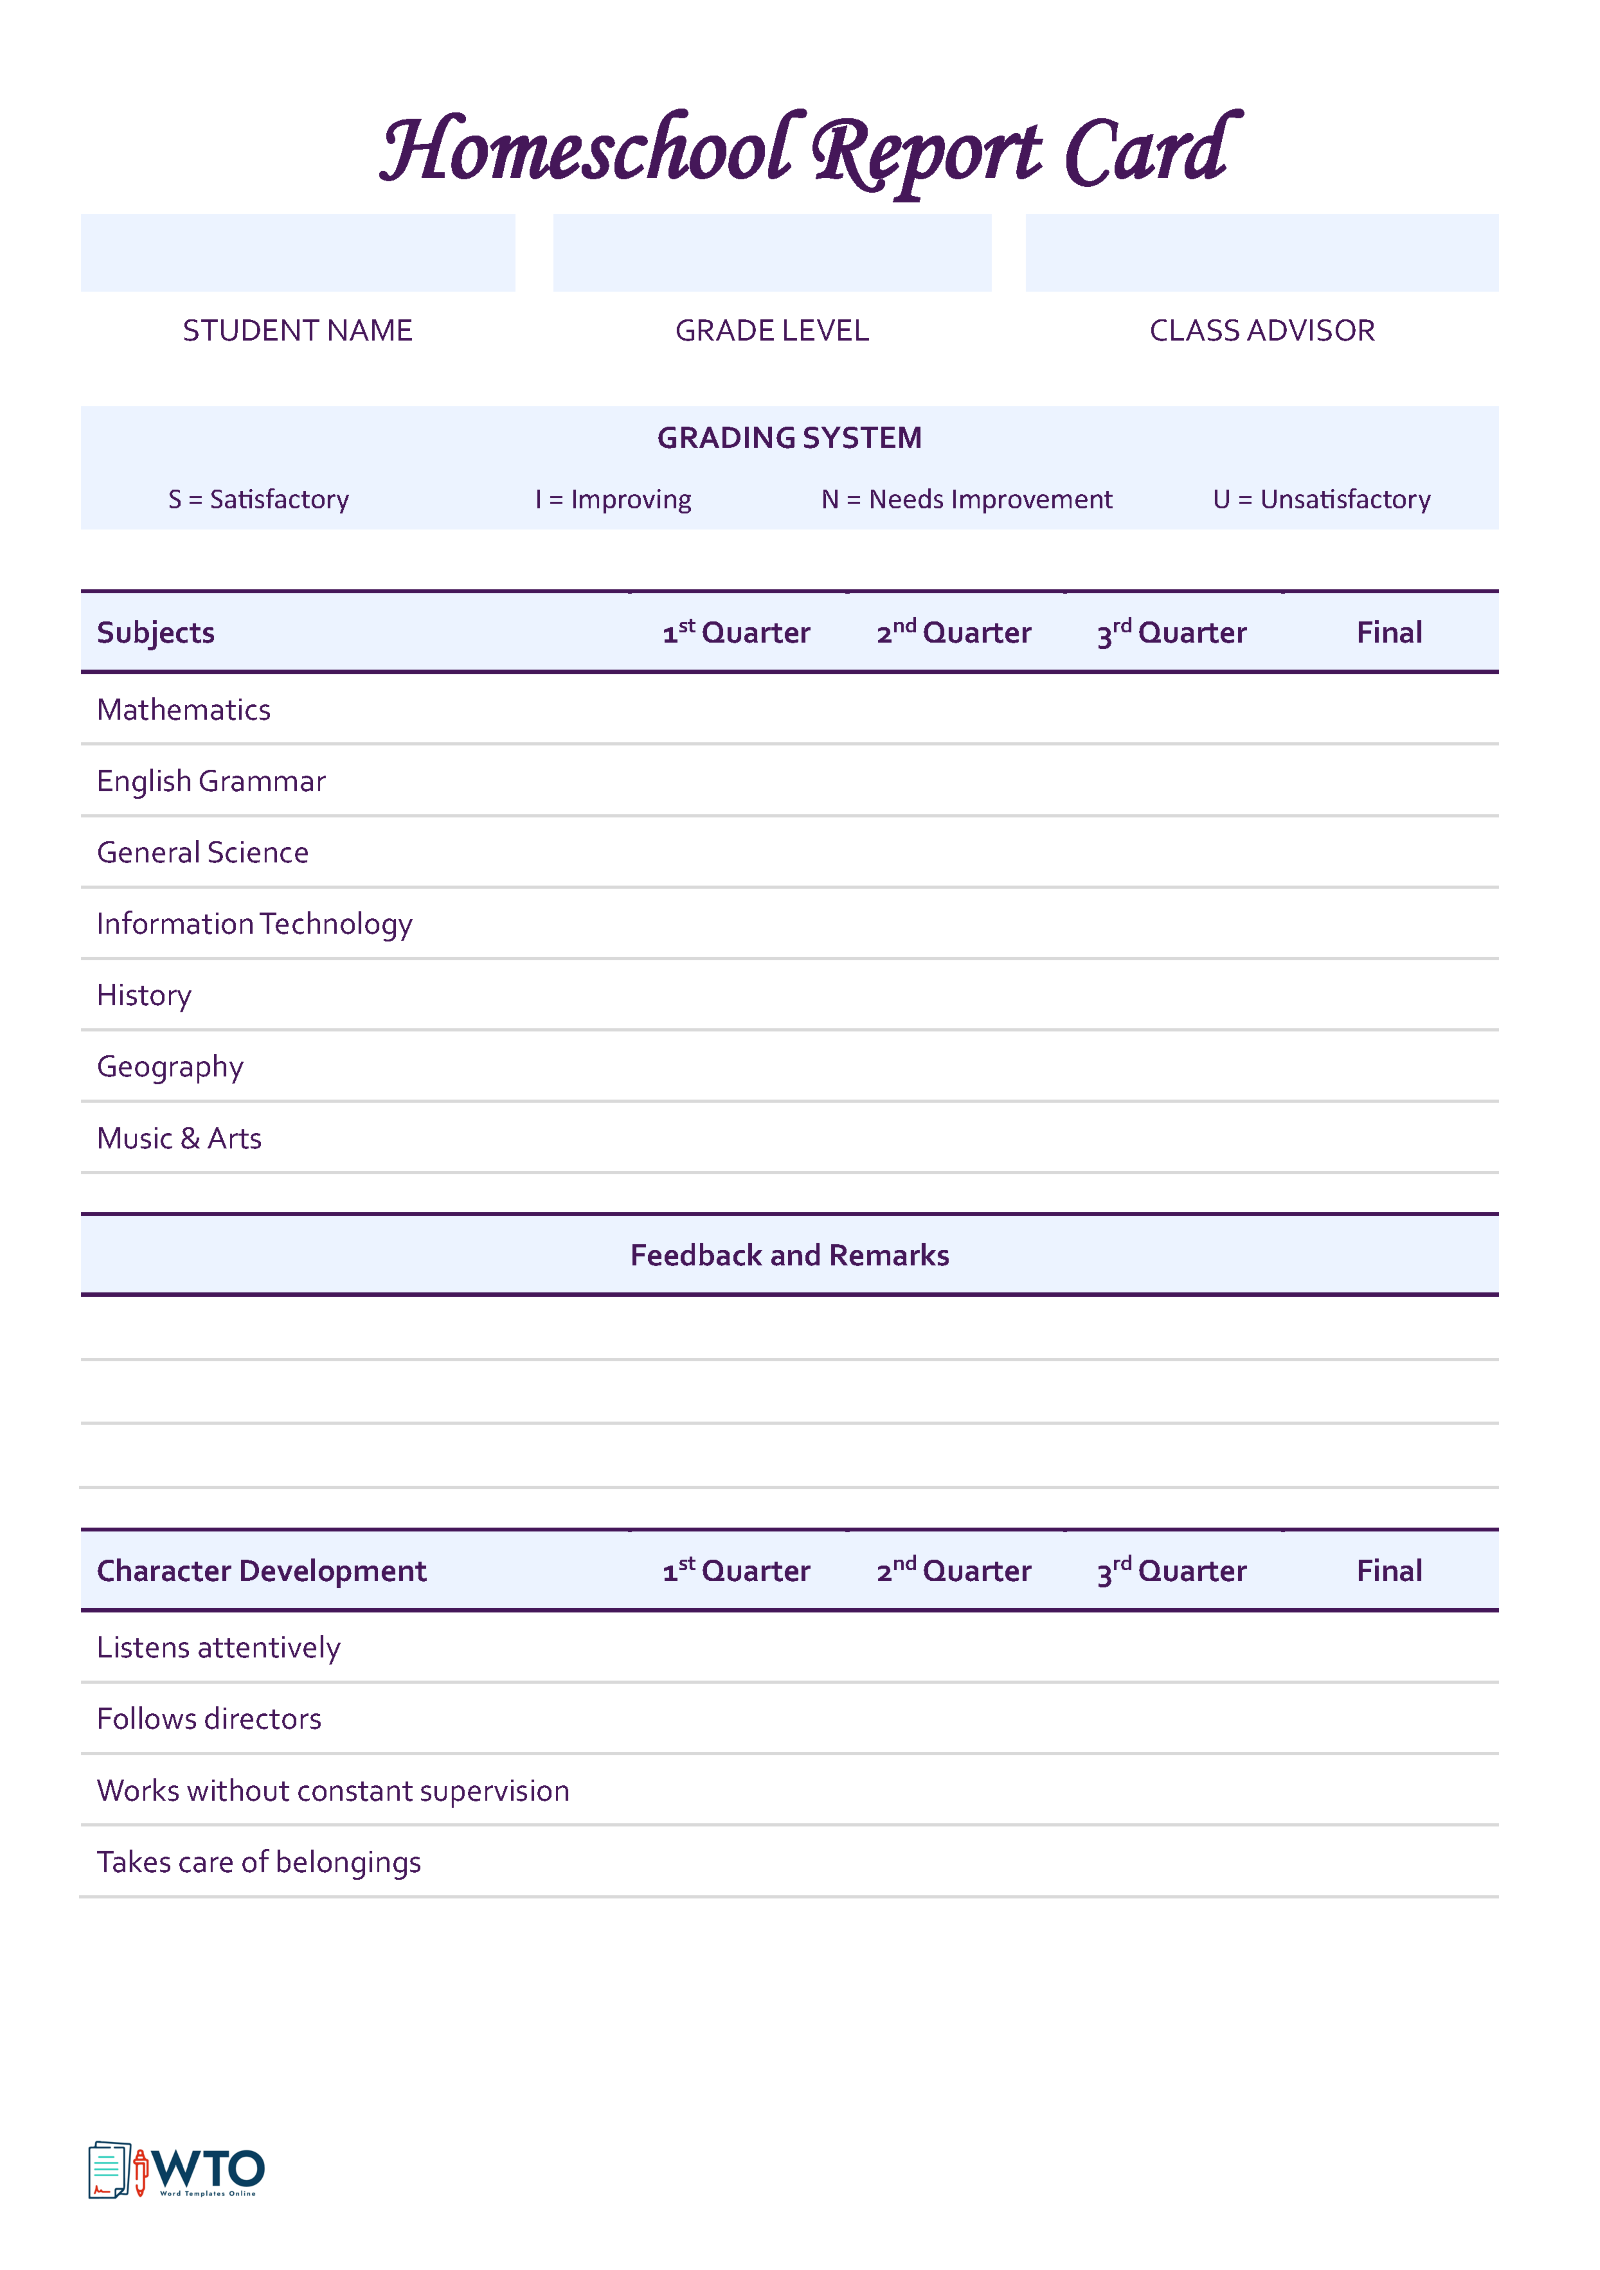 Effective Homeschooling Assessment - Sample Report Card